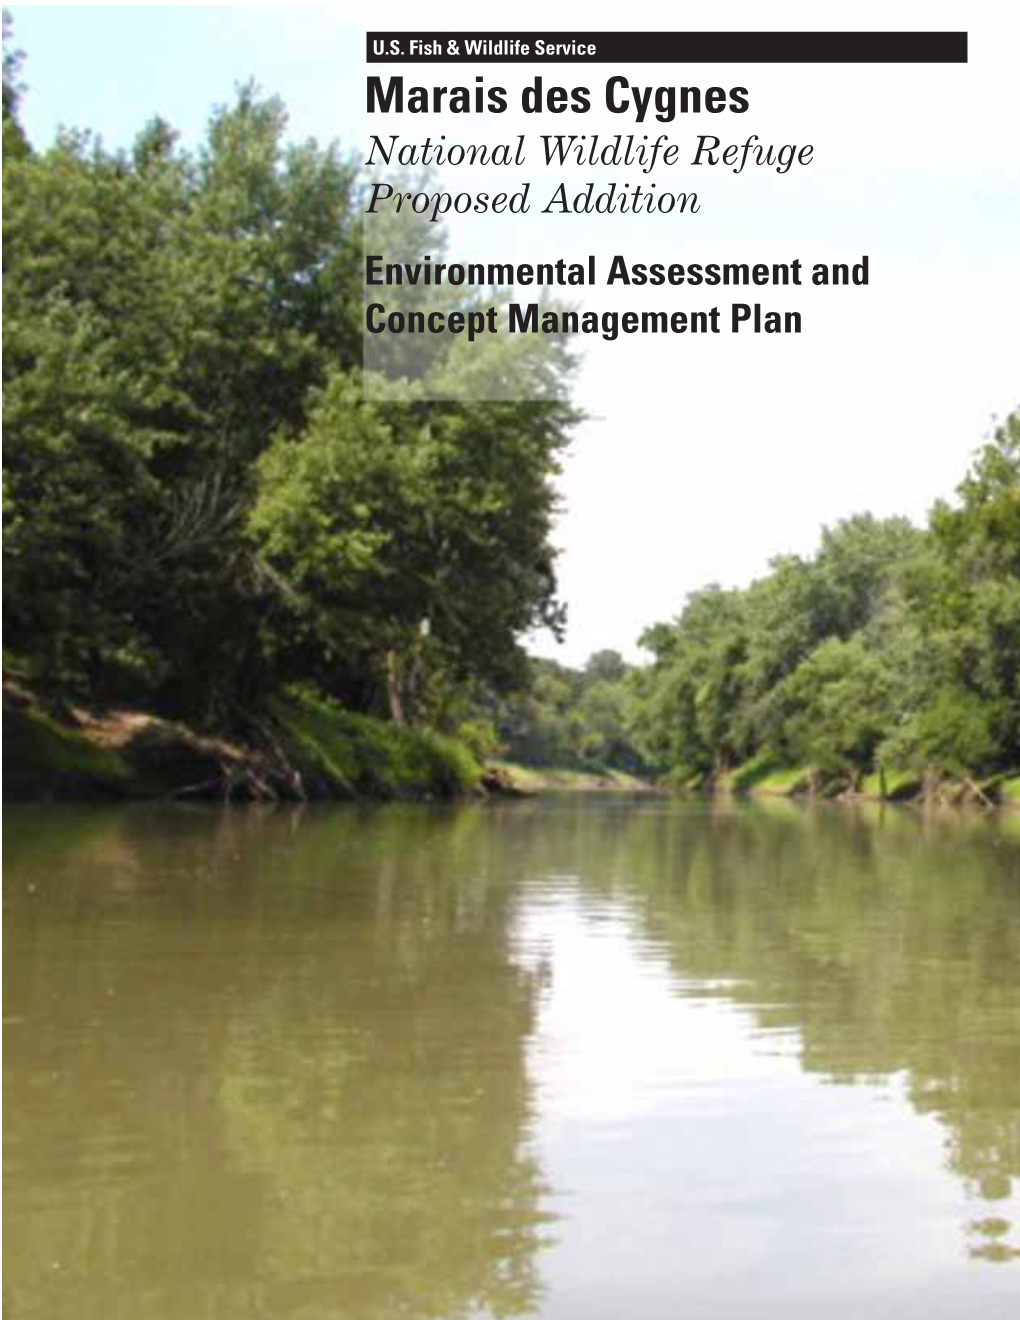 Marais Des Cygnes National Wildlife Refuge Proposed Addition Environmental Assessment and Concept Management Plan Contents